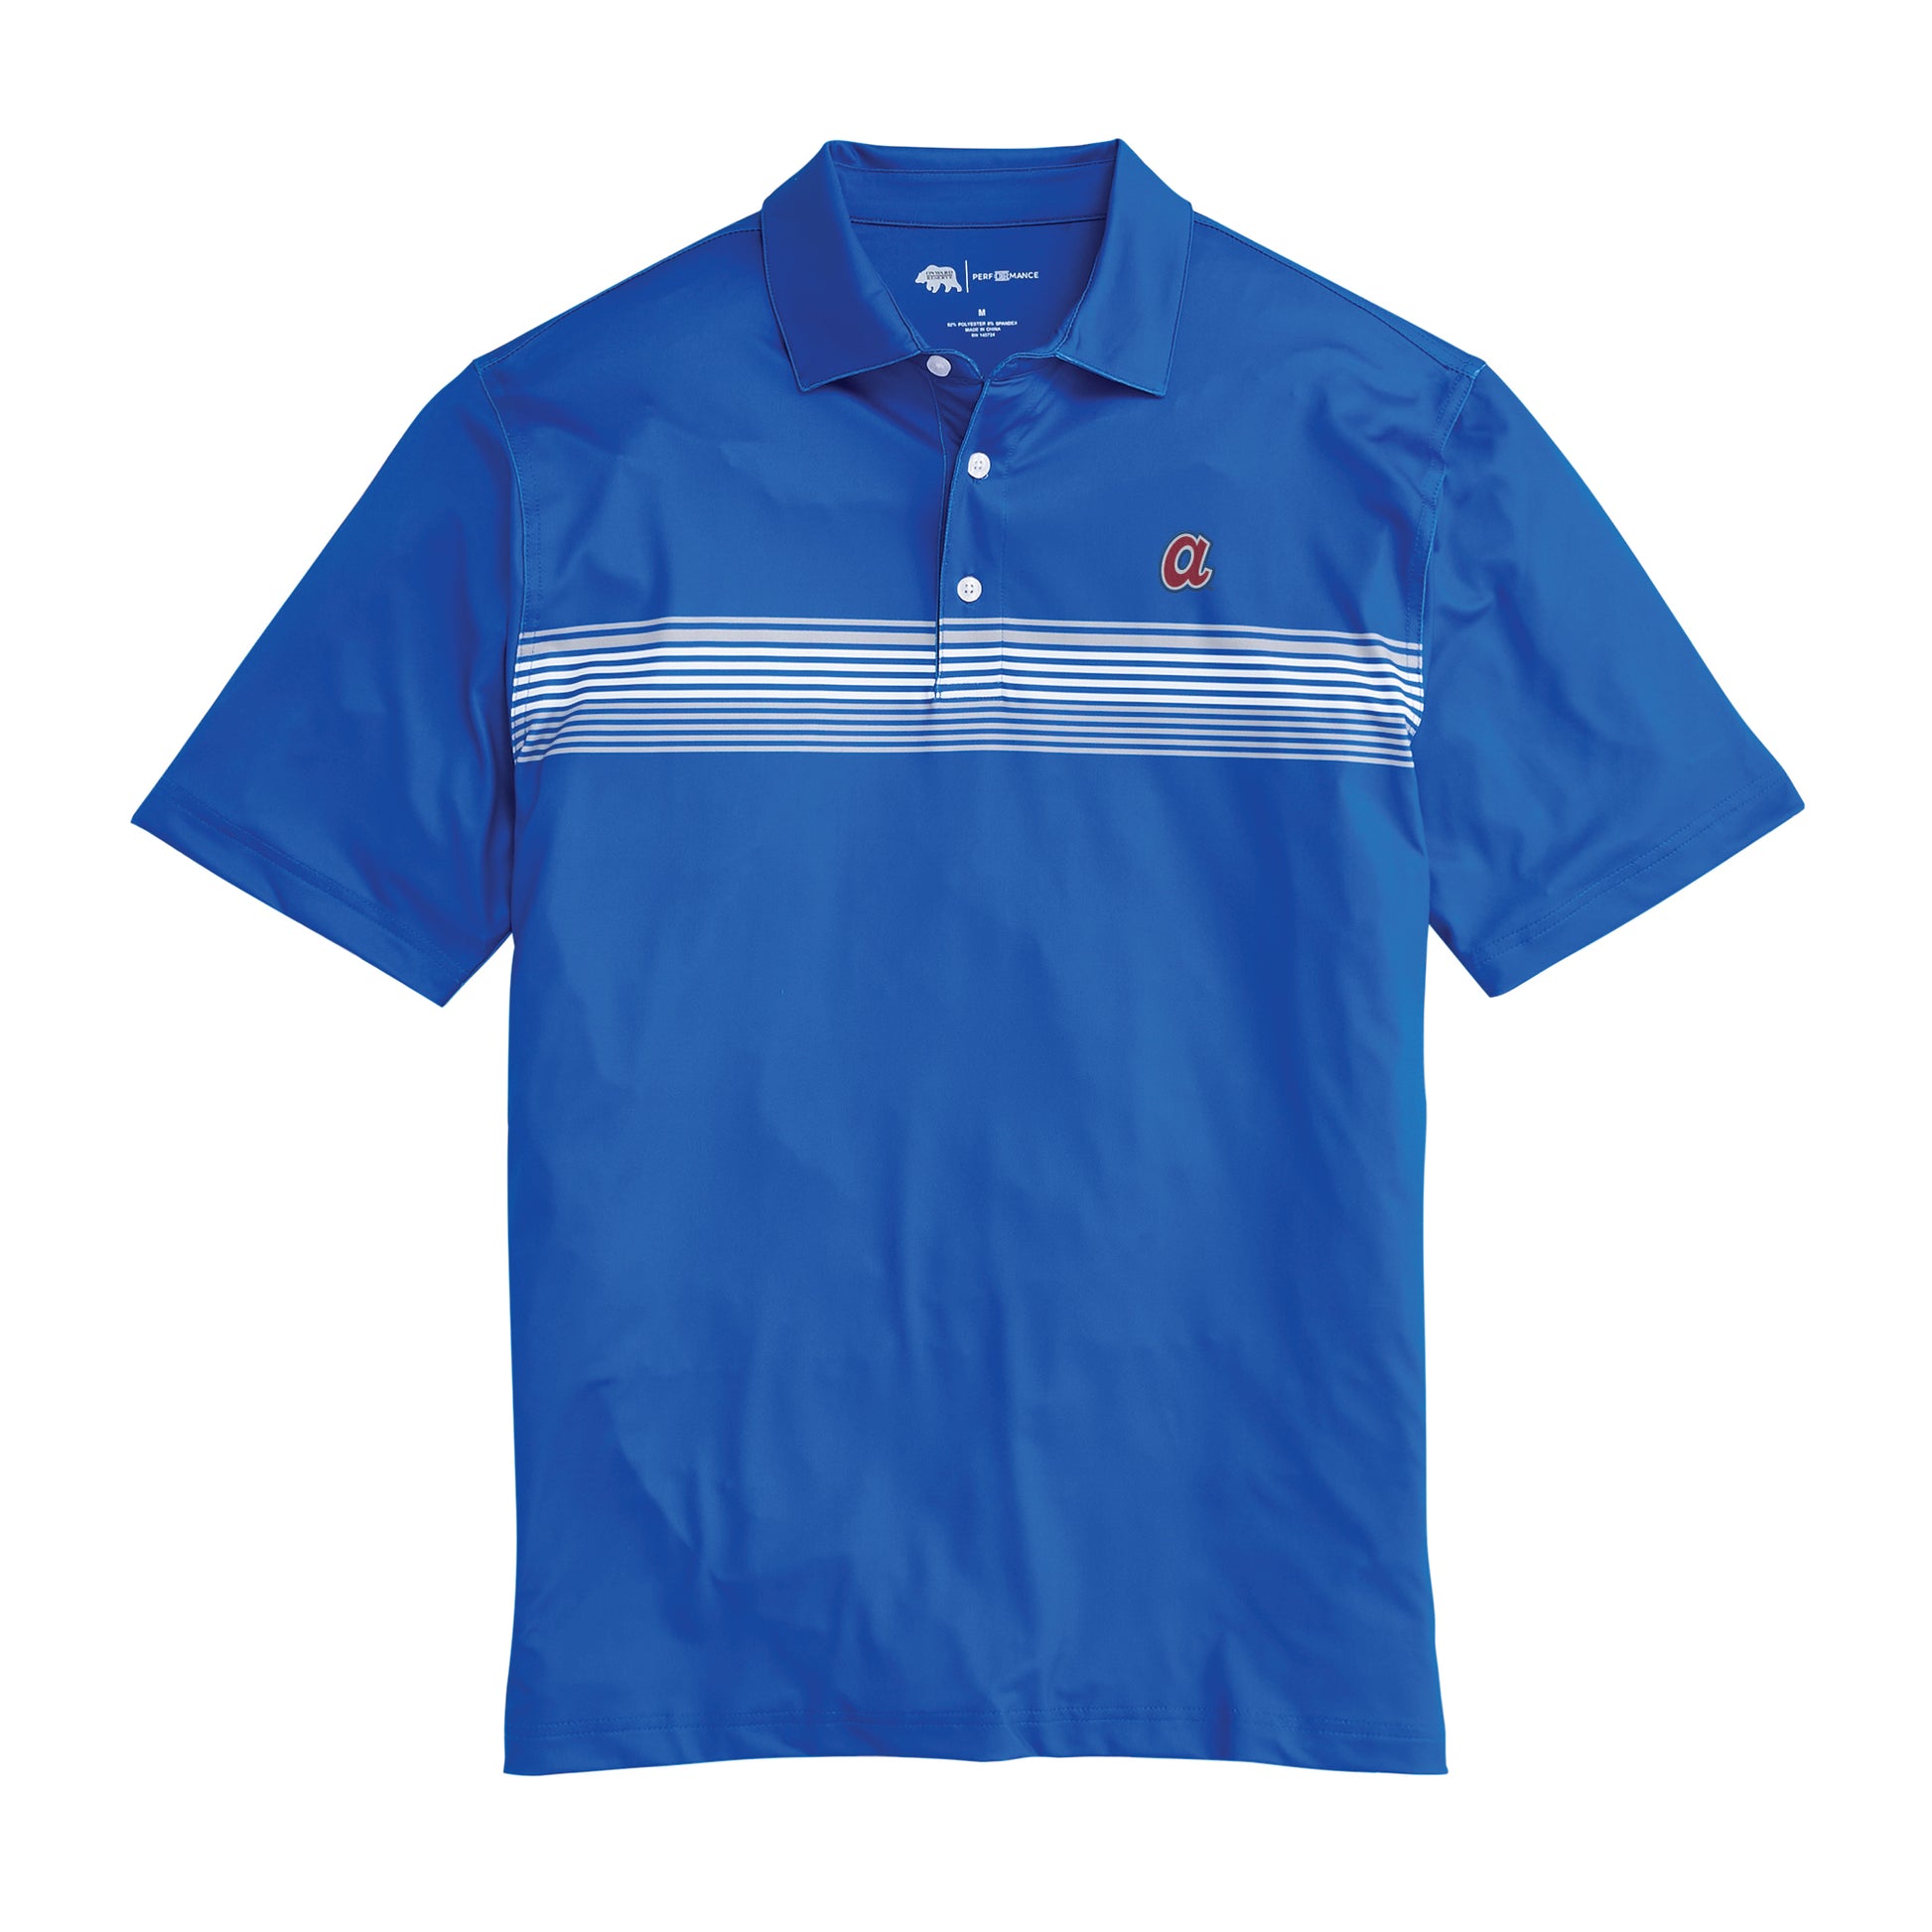 Official Oakland Athletics Polos, A's Golf Shirts, Dress Shirts